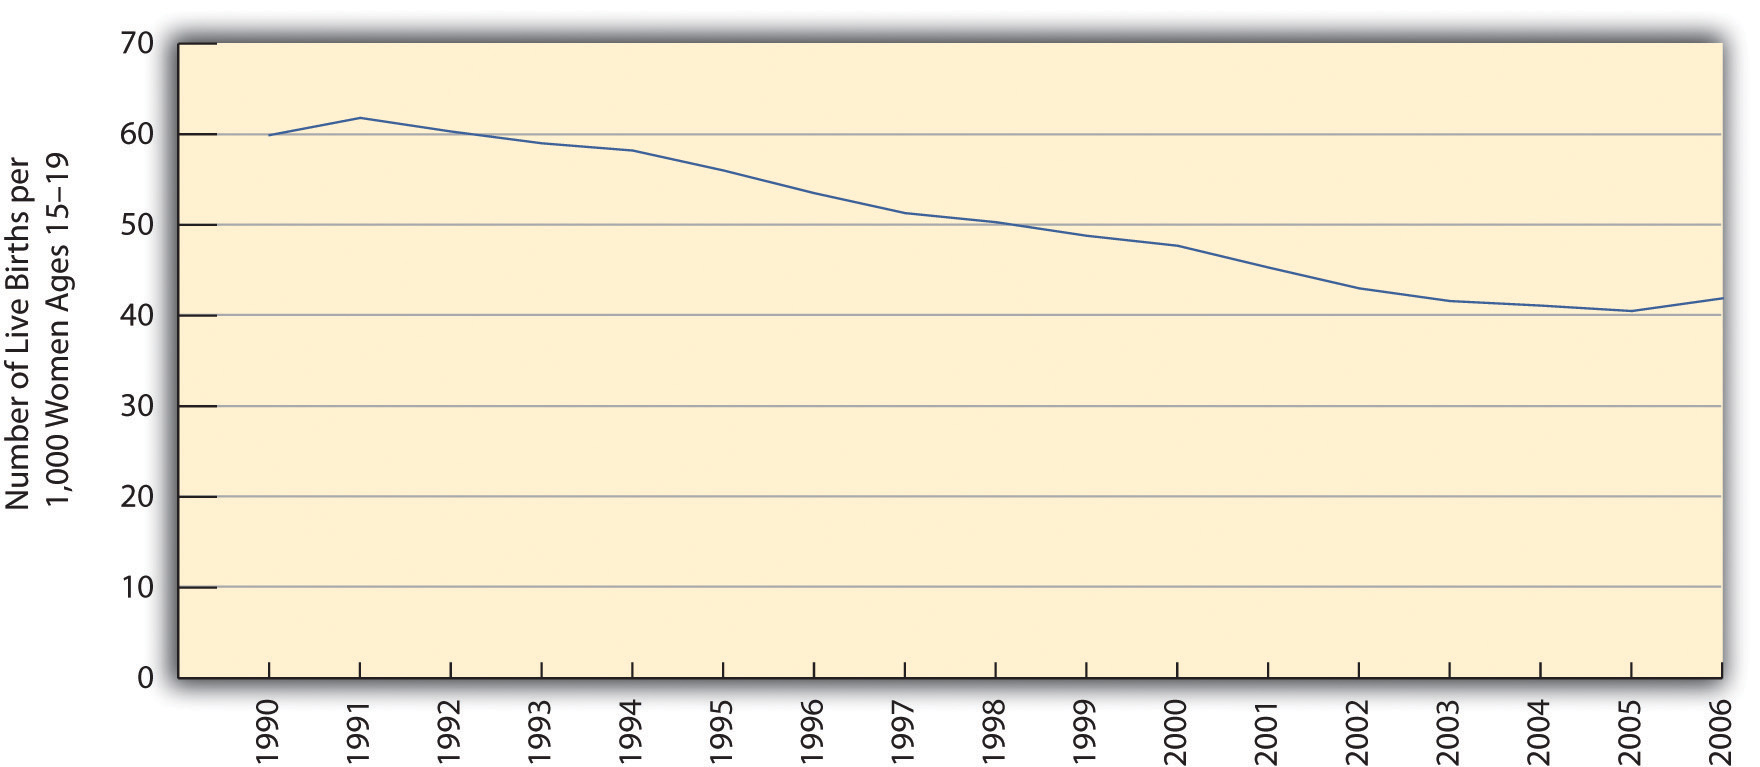 US Teenage Fertility Rate, 1990-2006